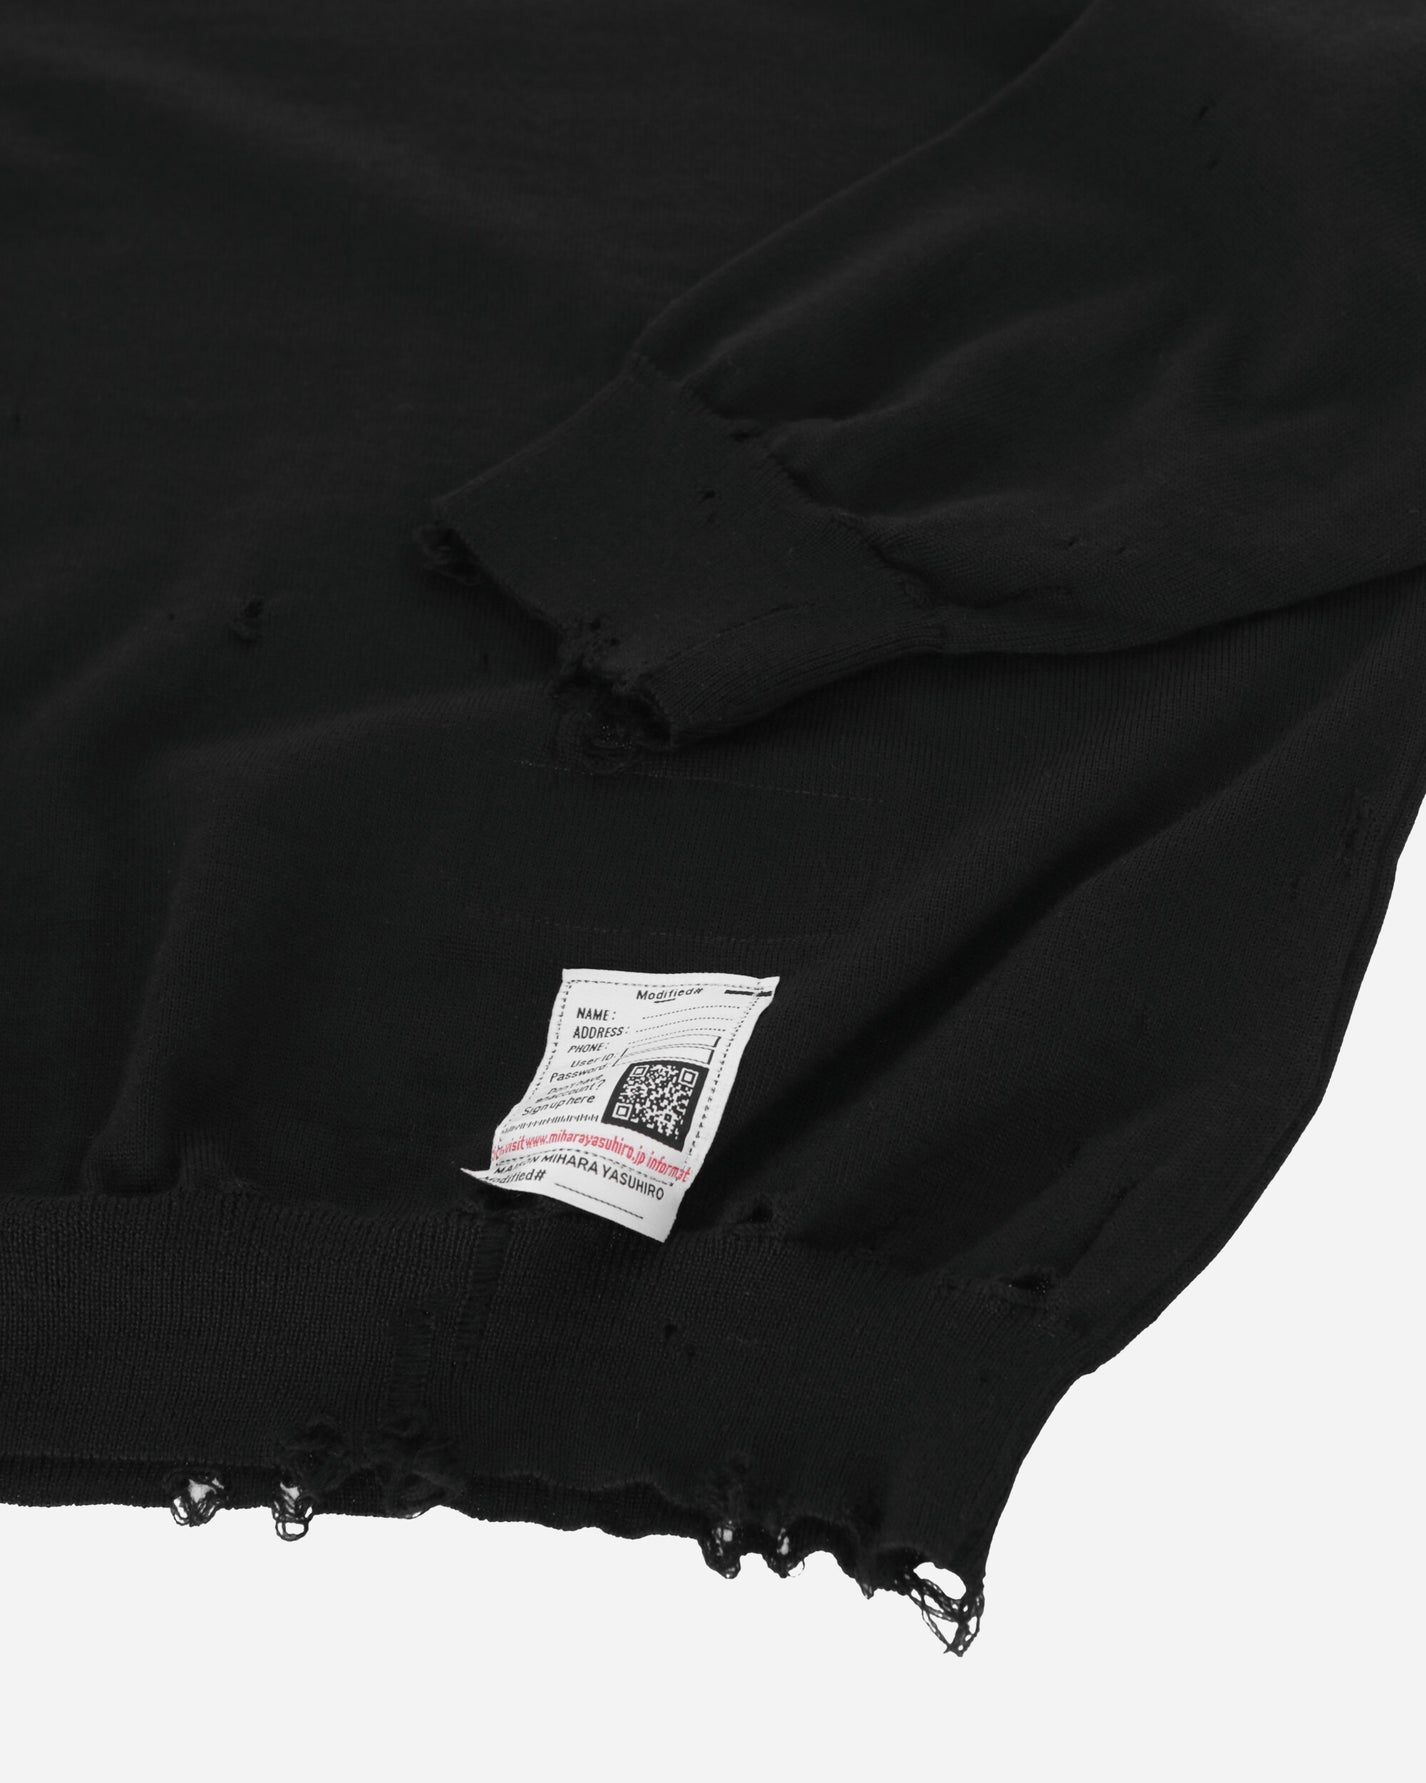 Maison MIHARA YASUHIRO Distressed Knit Pullover Black Knitwears Sweaters J11SW503 BLACK